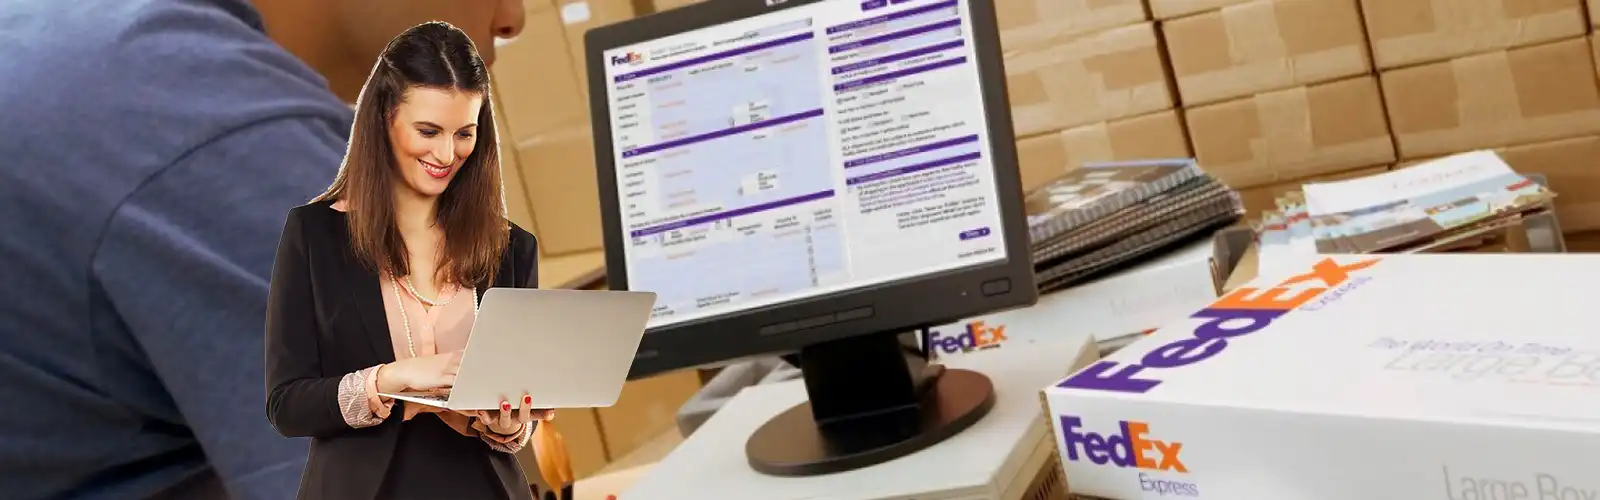 FedEx-customer-service